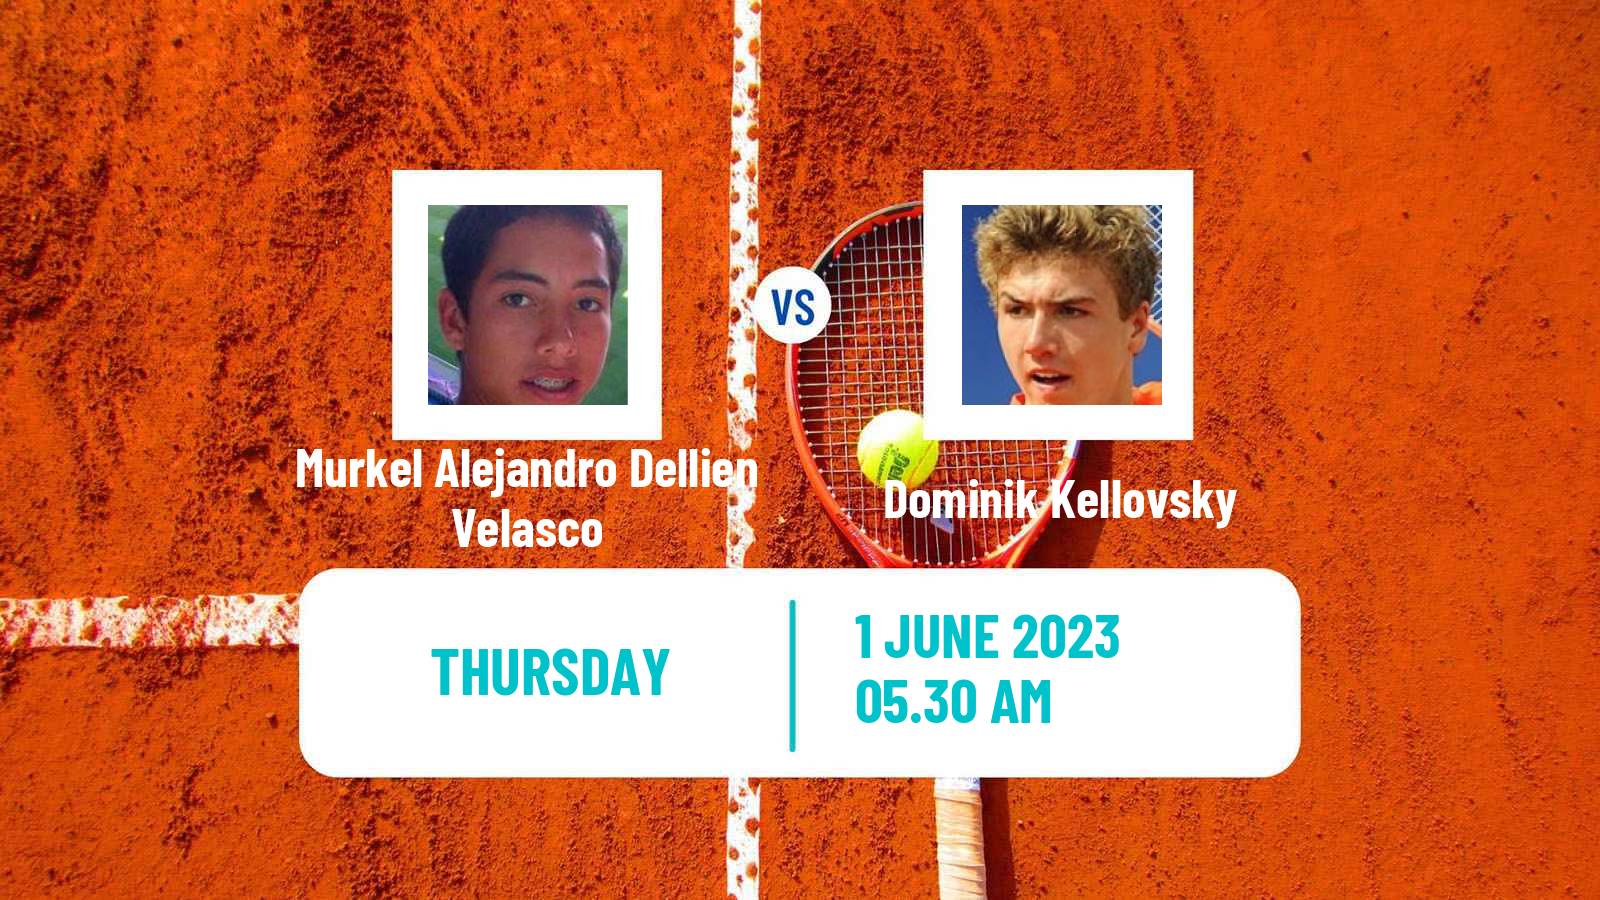 Tennis ITF M25 Jablonec Nad Nisou Men Murkel Alejandro Dellien Velasco - Dominik Kellovsky